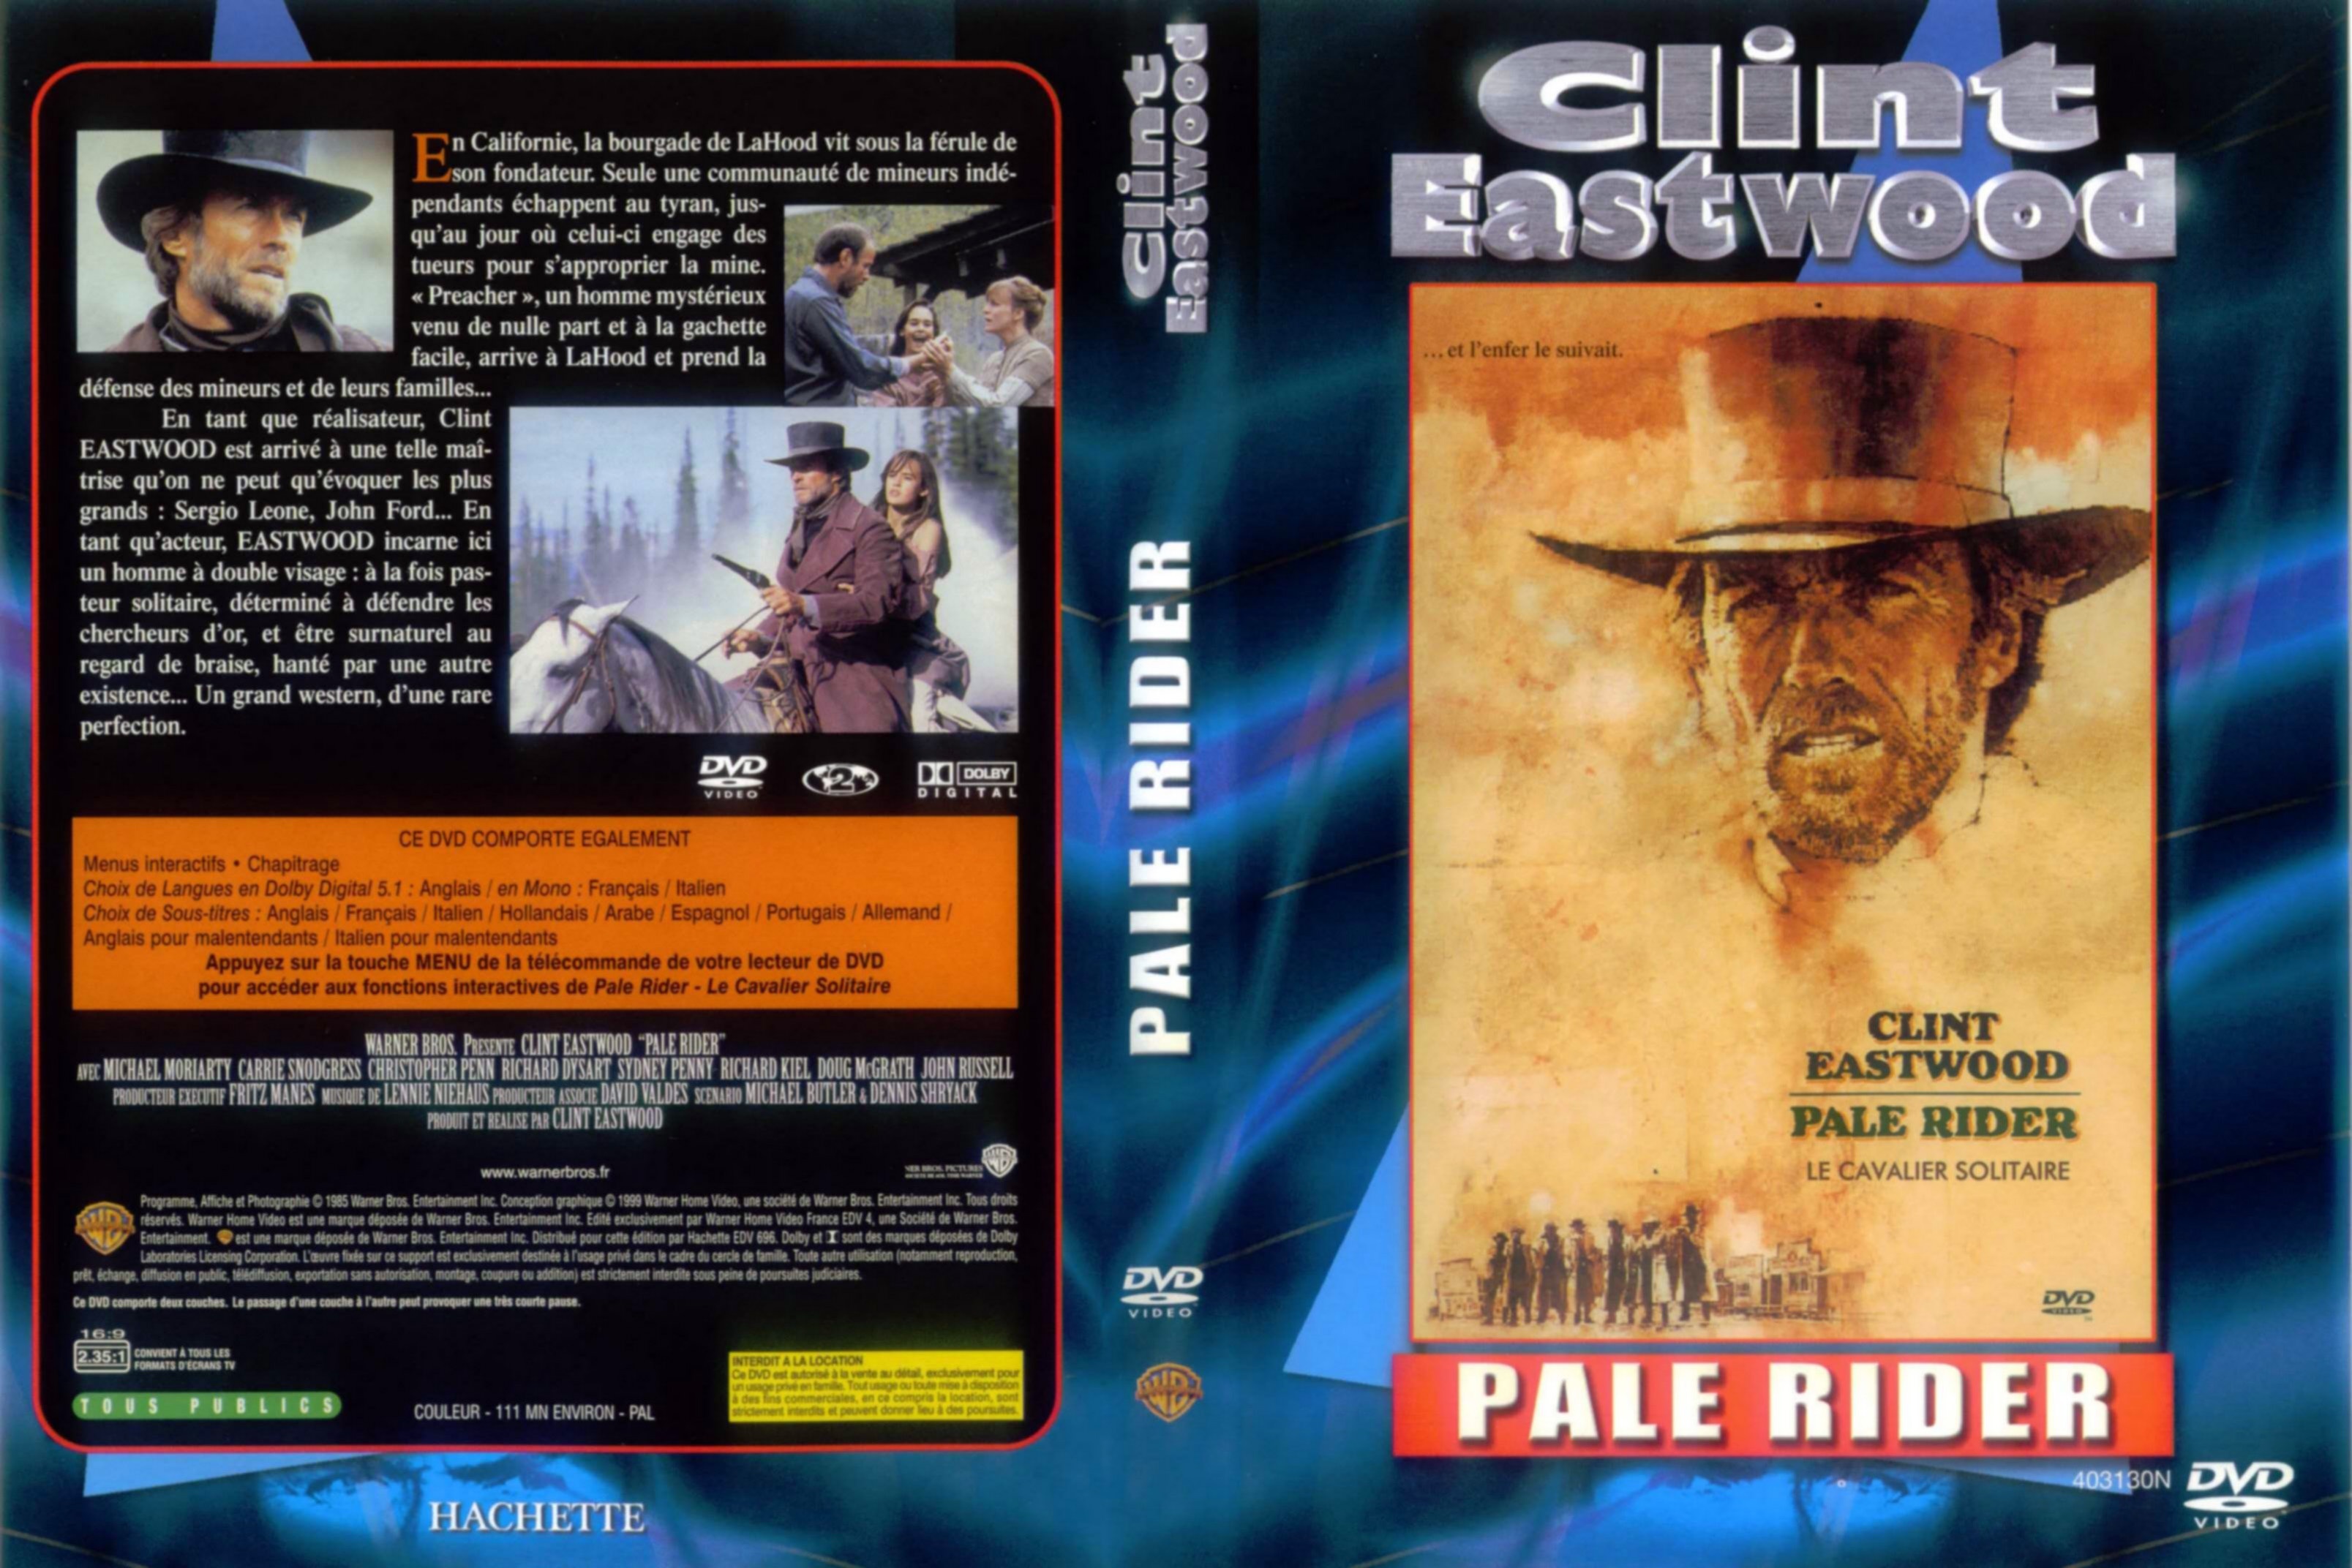 Jaquette DVD Pale rider v2